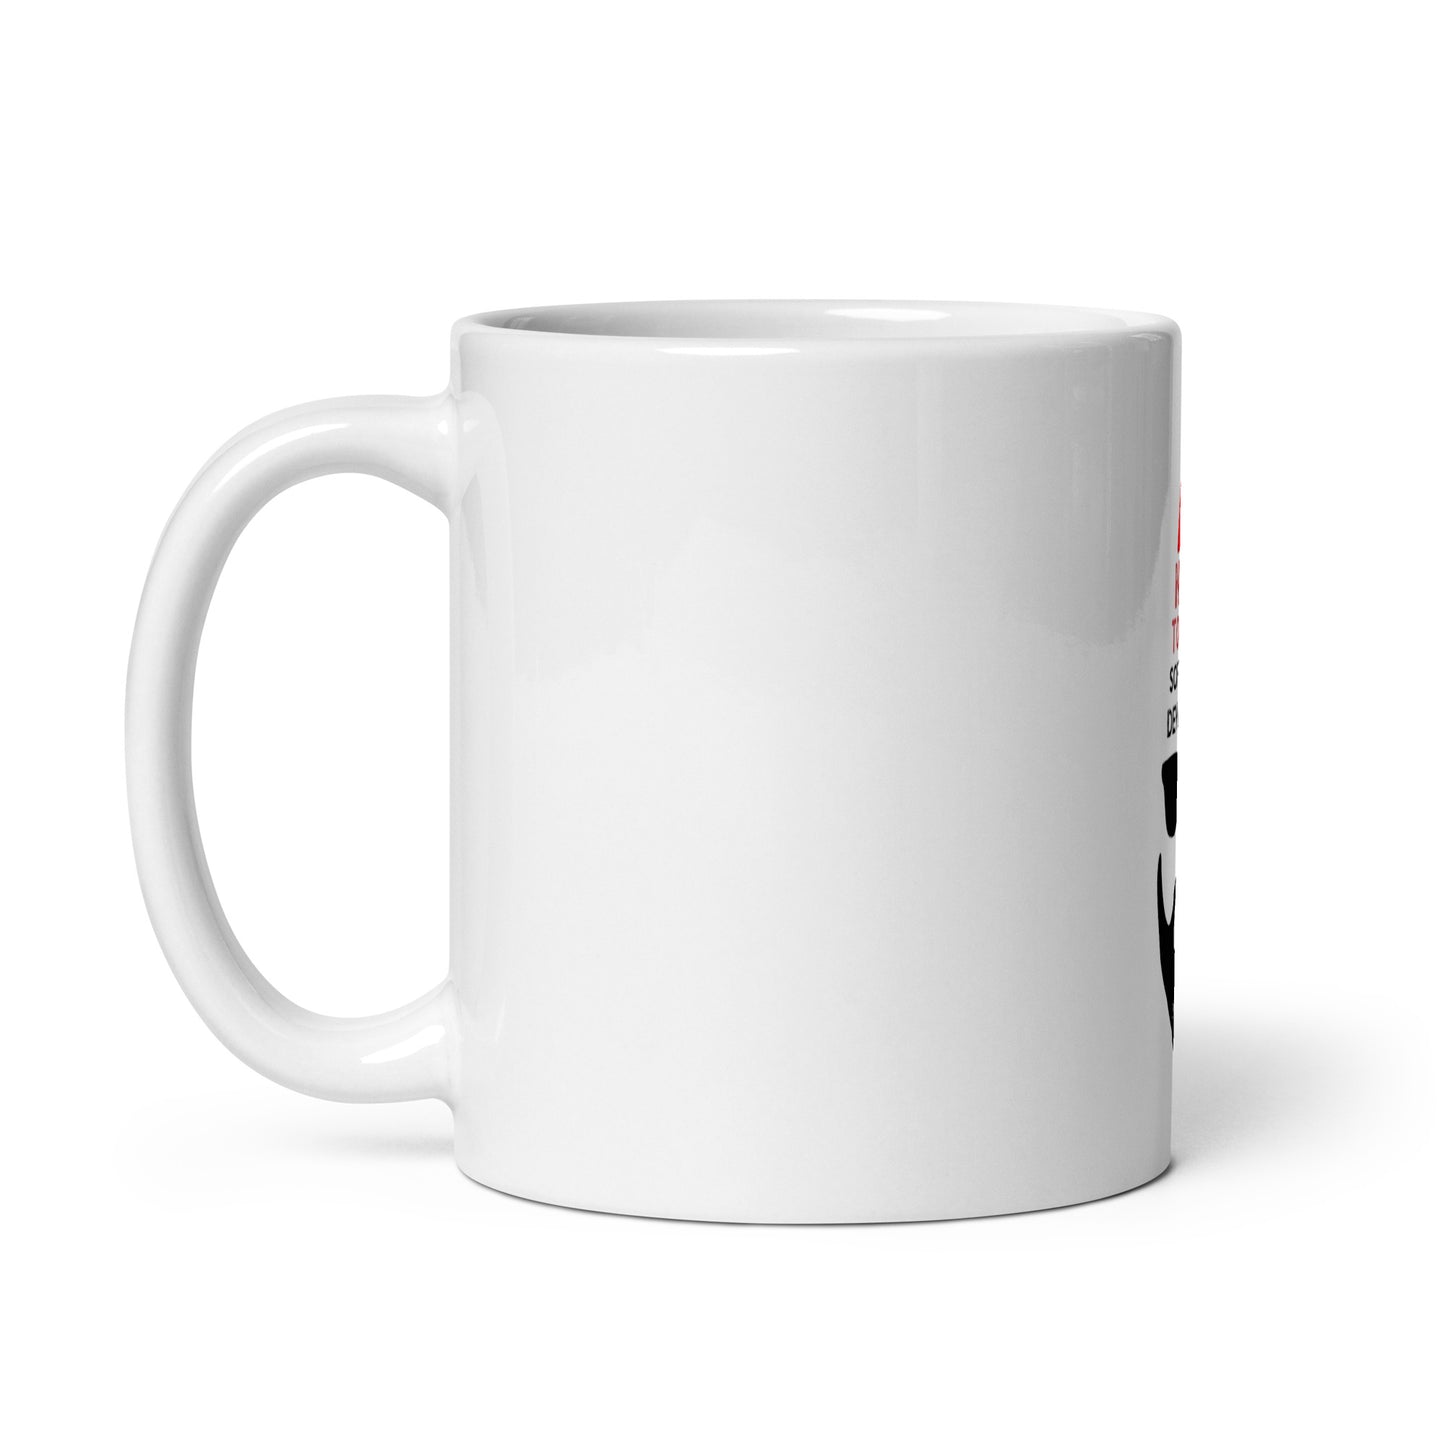 Be Nice To Developer mug